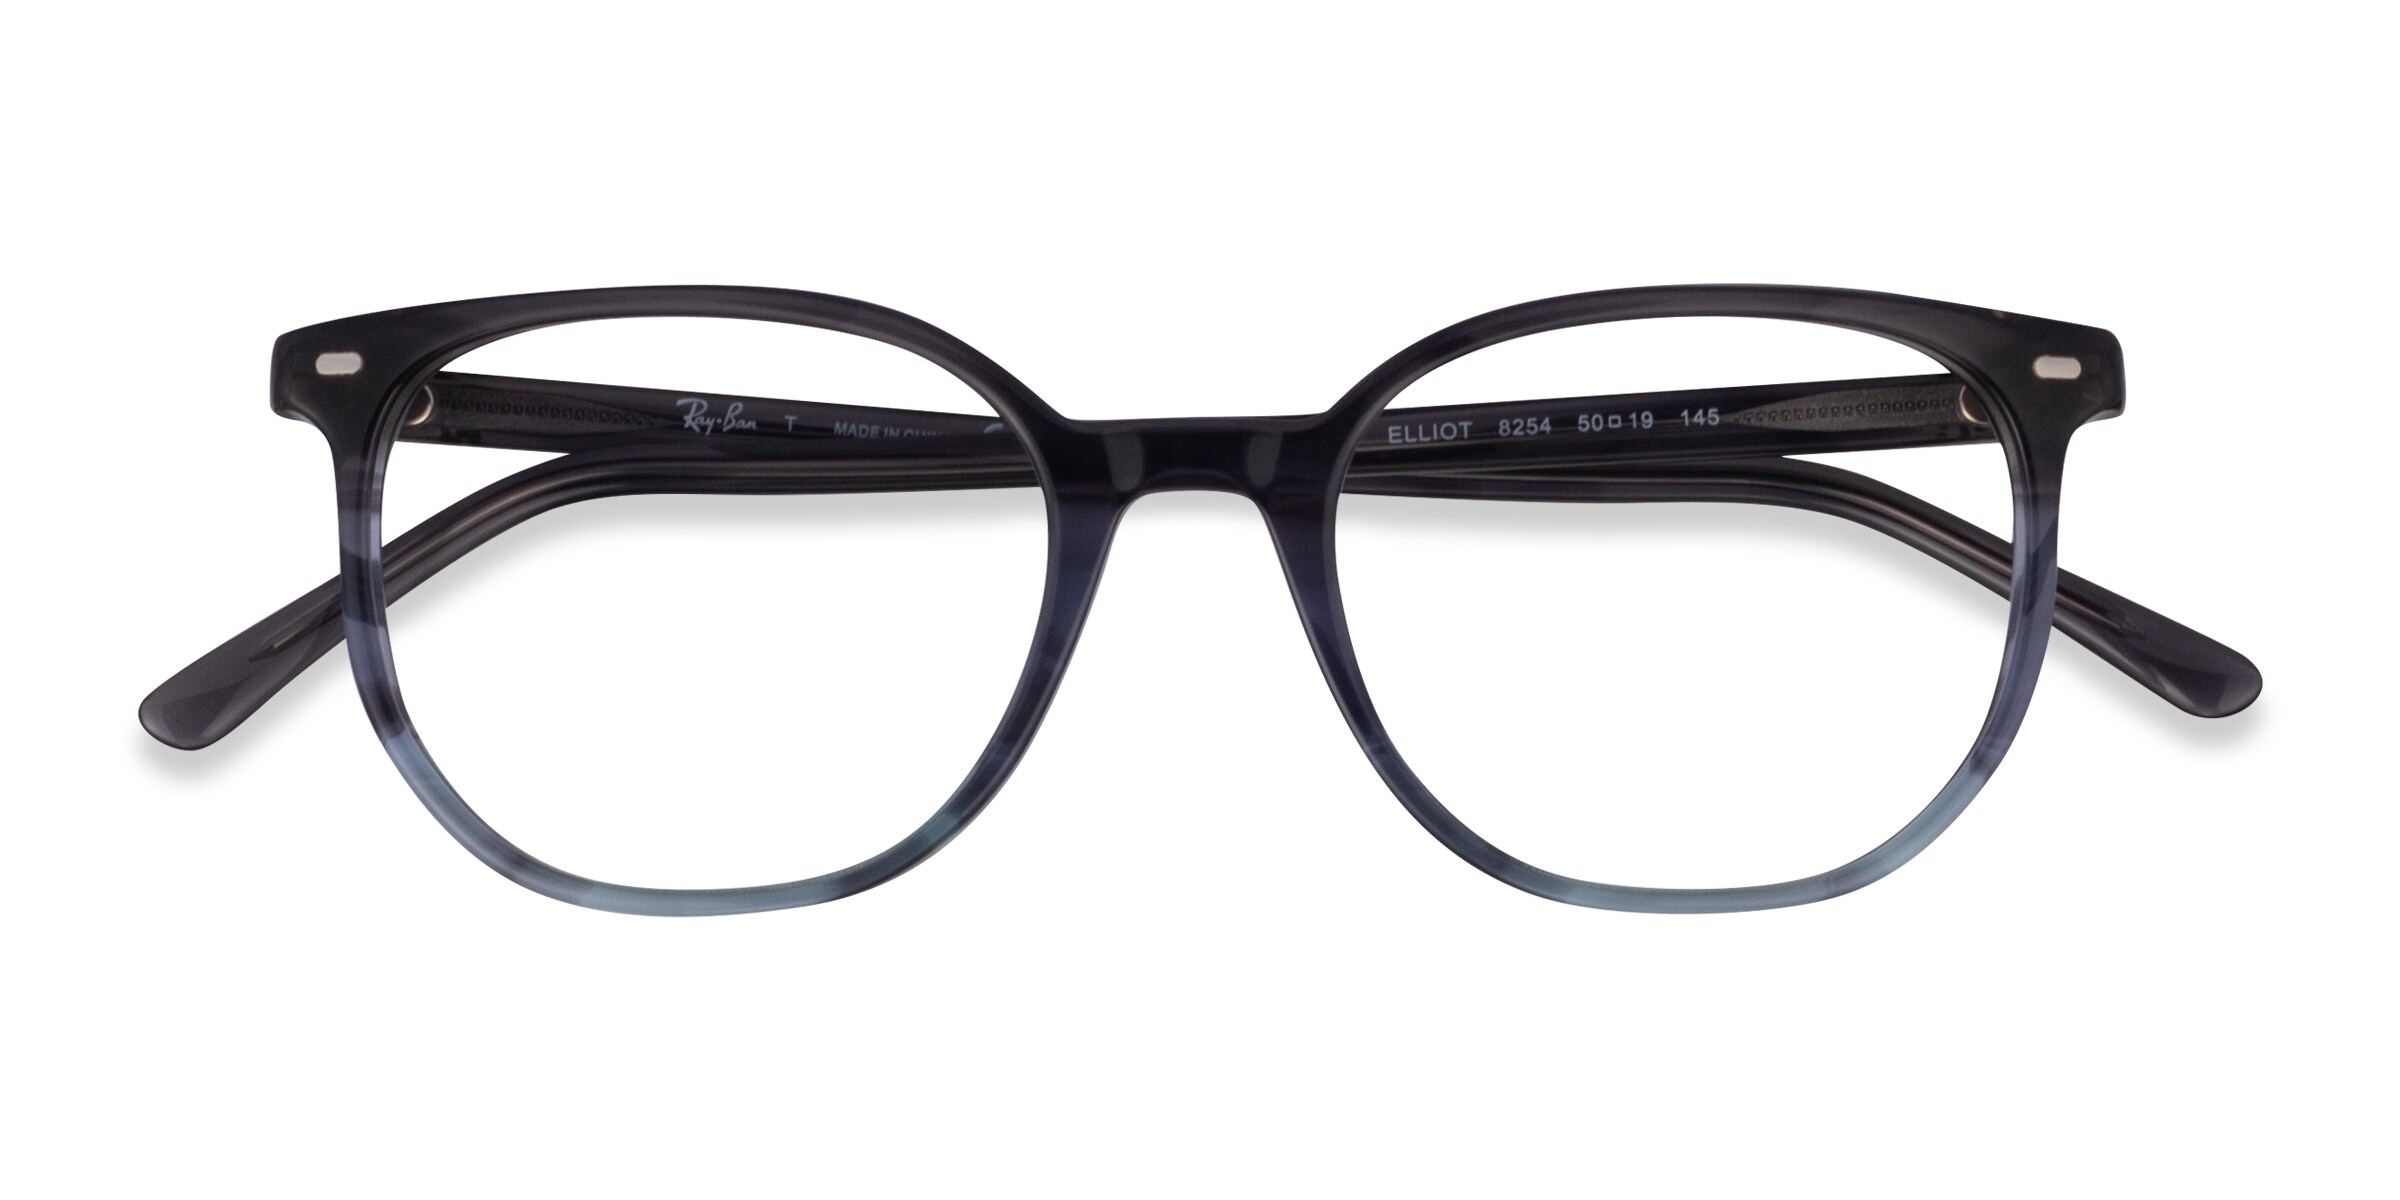 Ray-Ban RB5397 Elliot - Wayfarer Striped Gray Frame Eyeglasses 